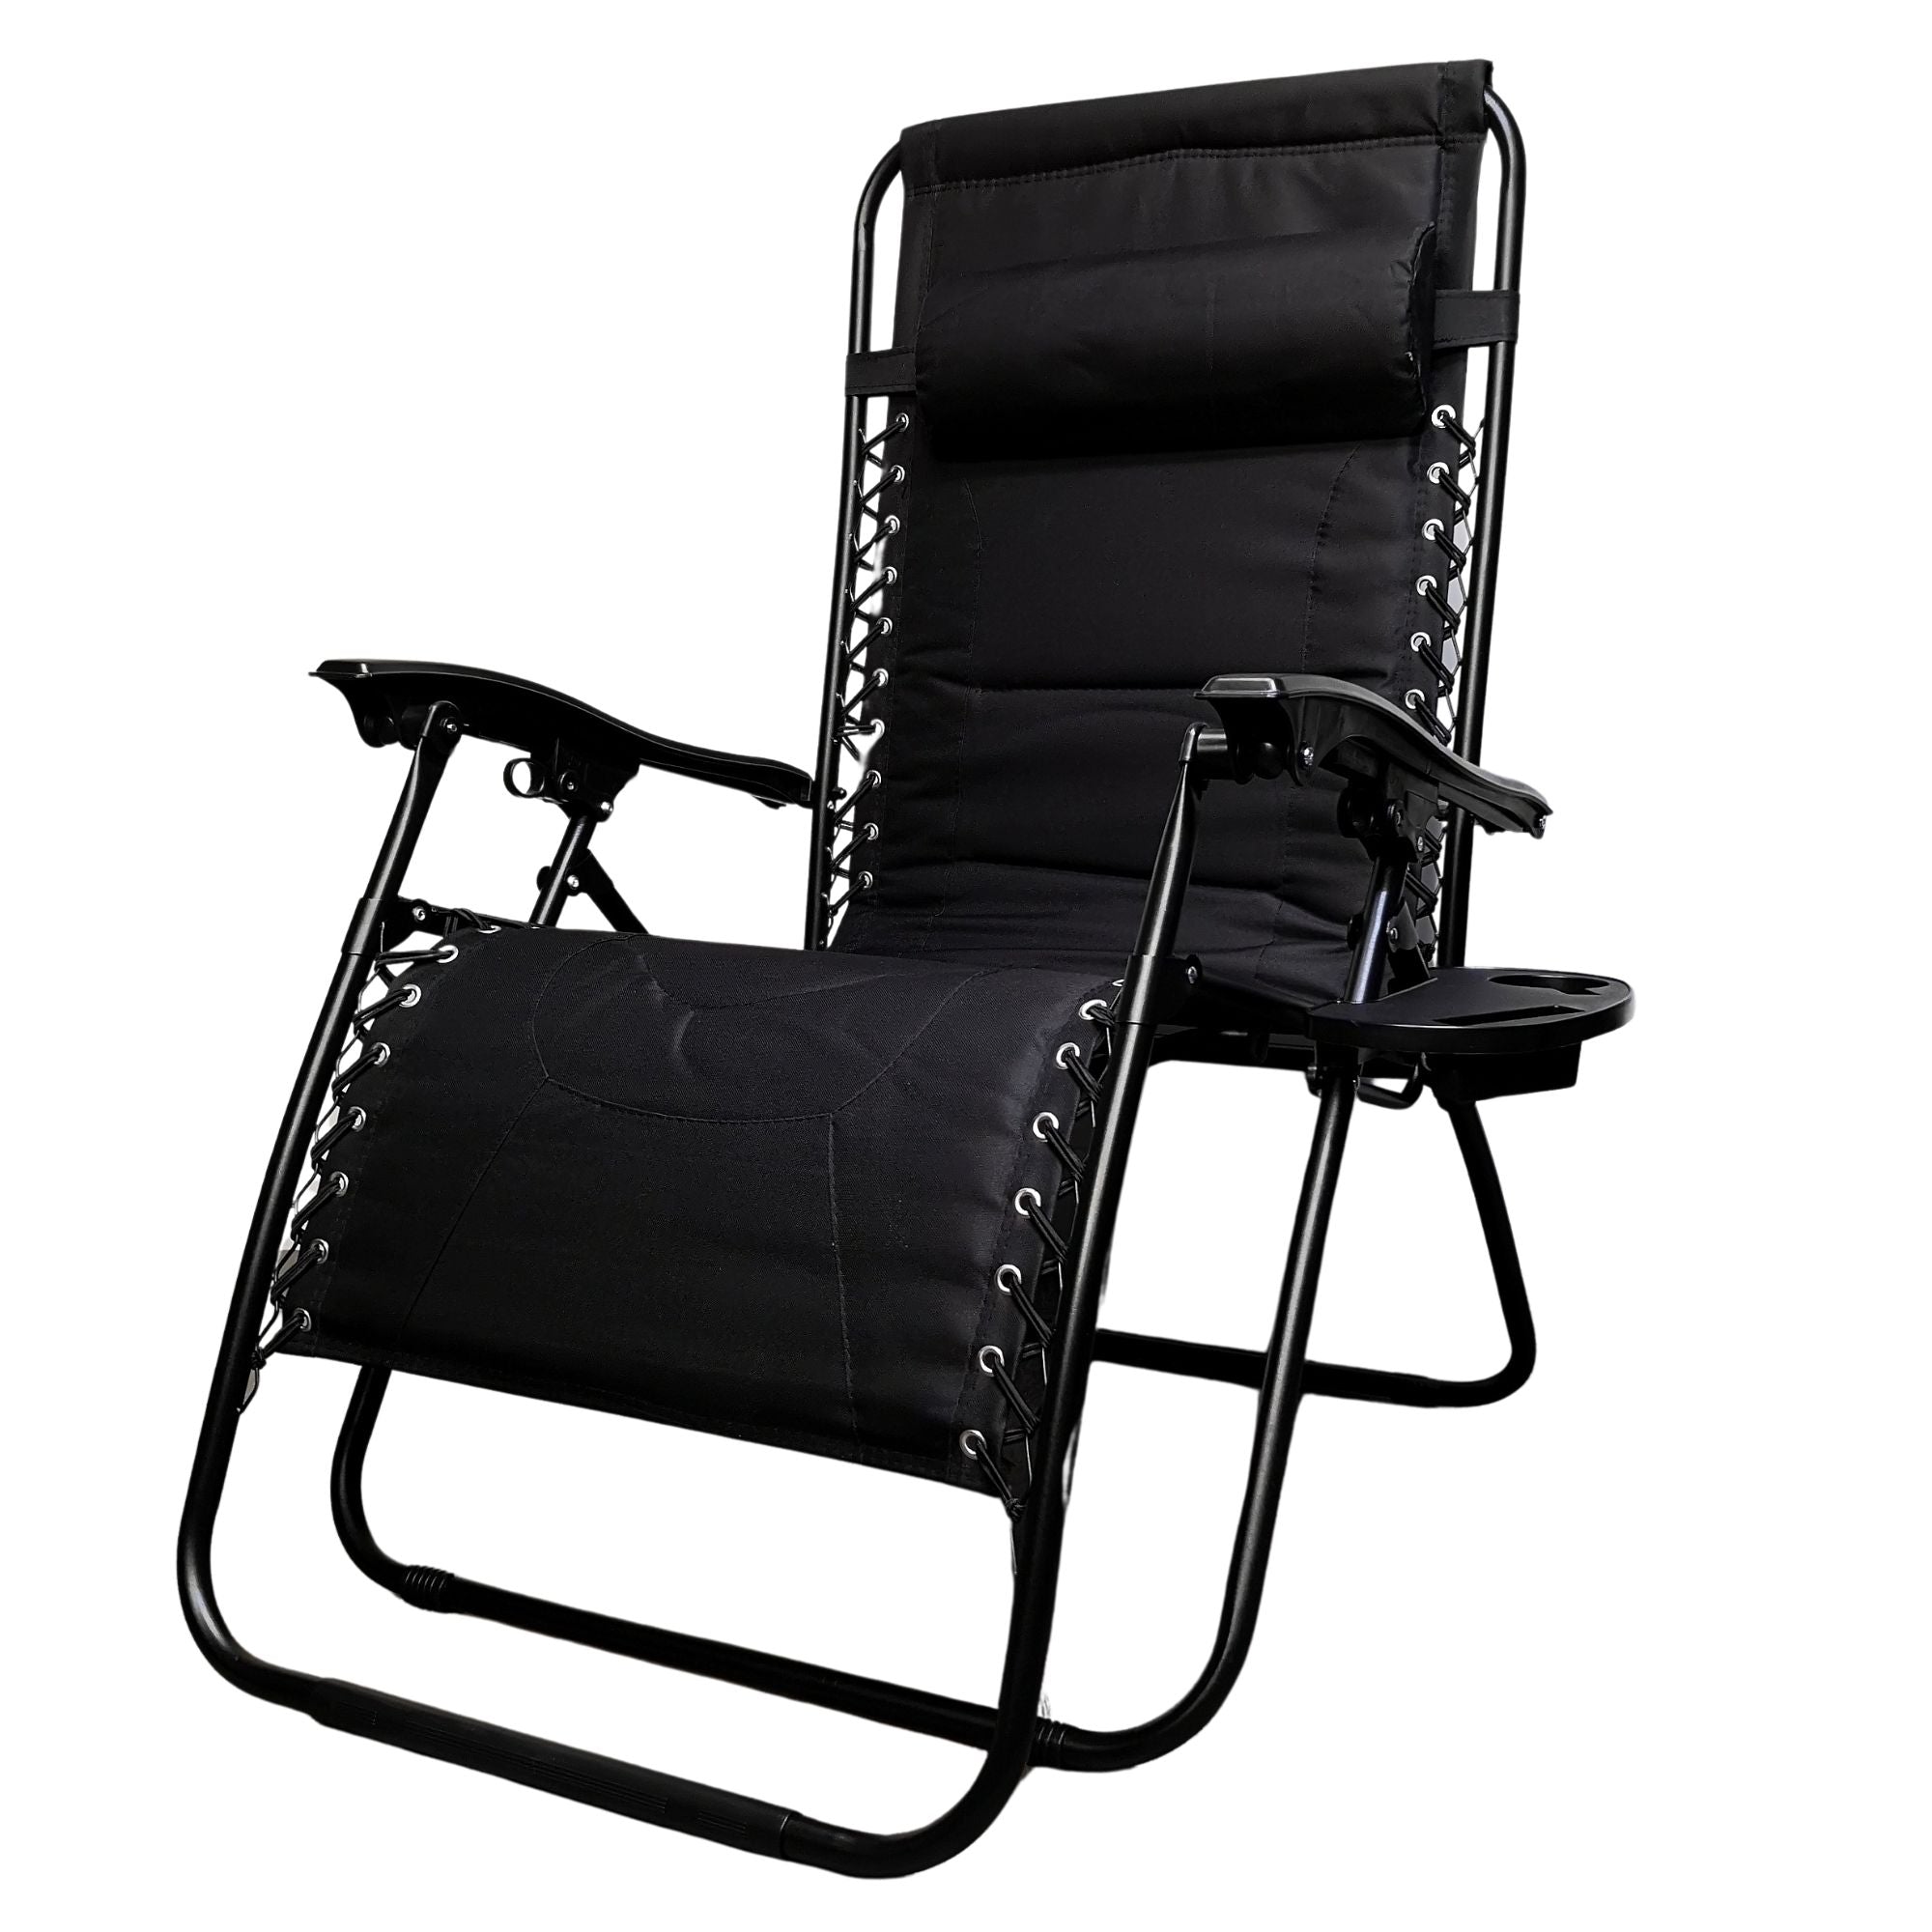 Luxury Padded Multi Position Zero Gravity Garden Relaxer Chair Lounger in All Black